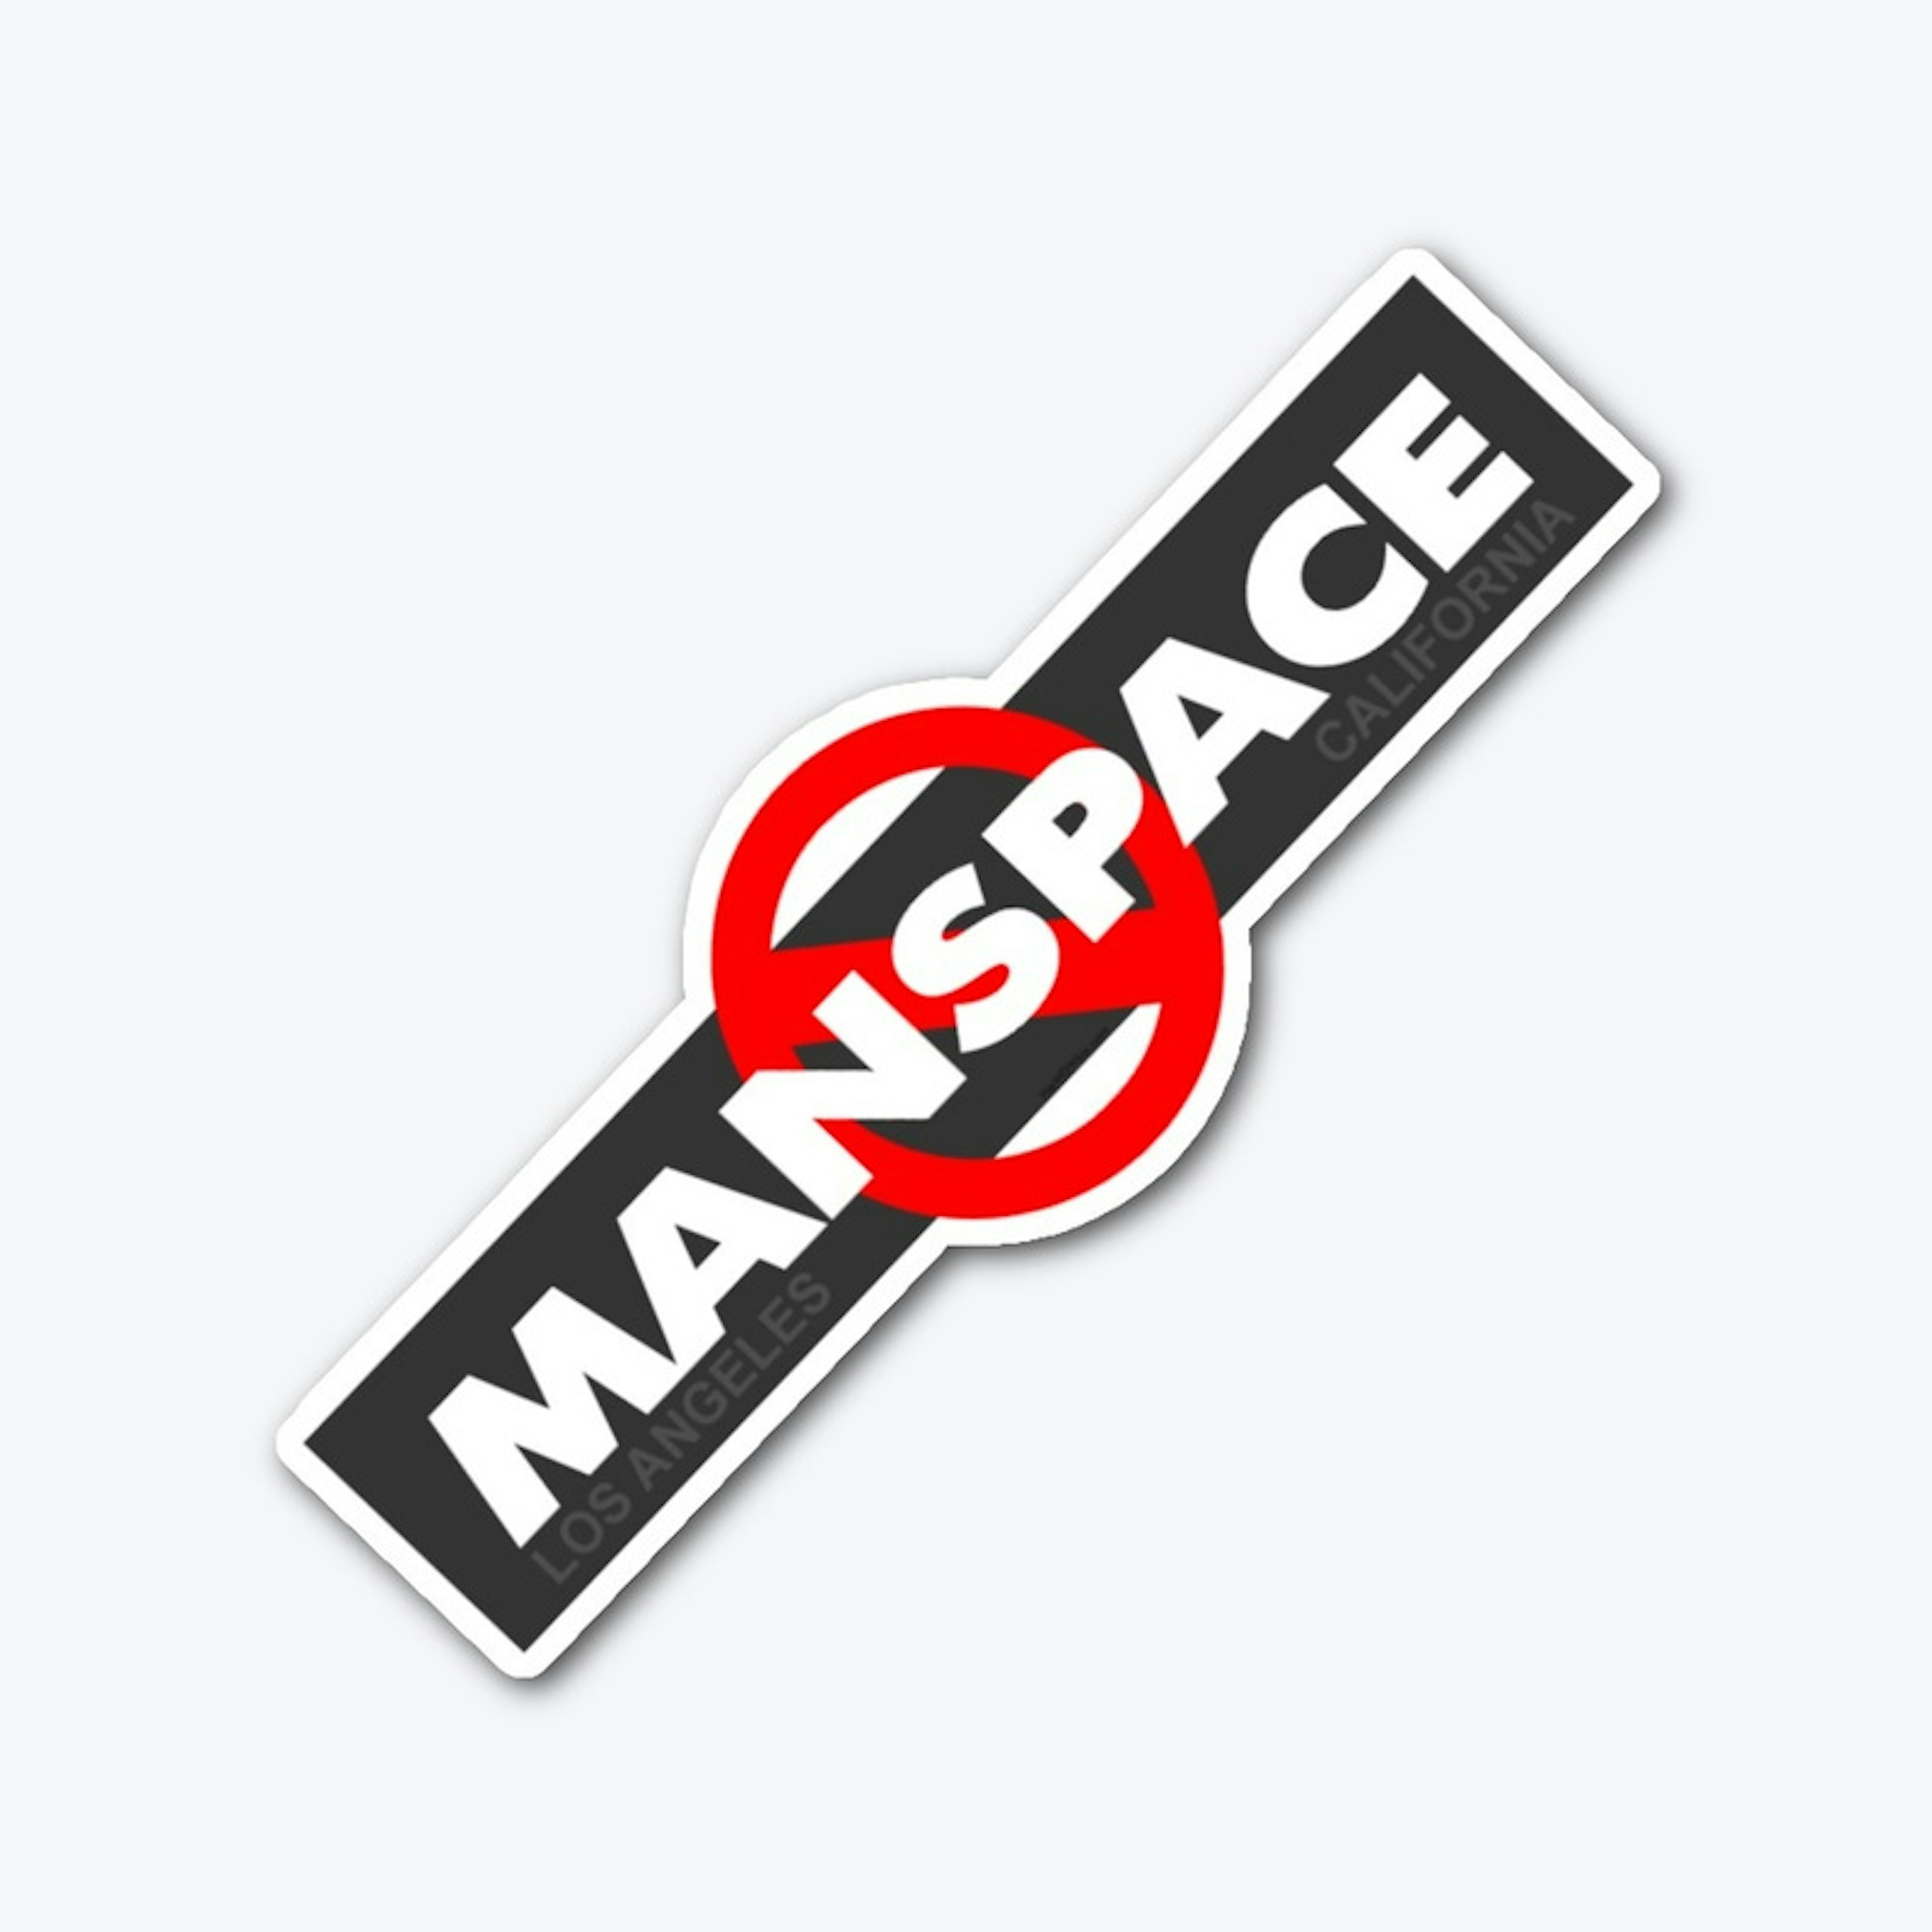 Manspace